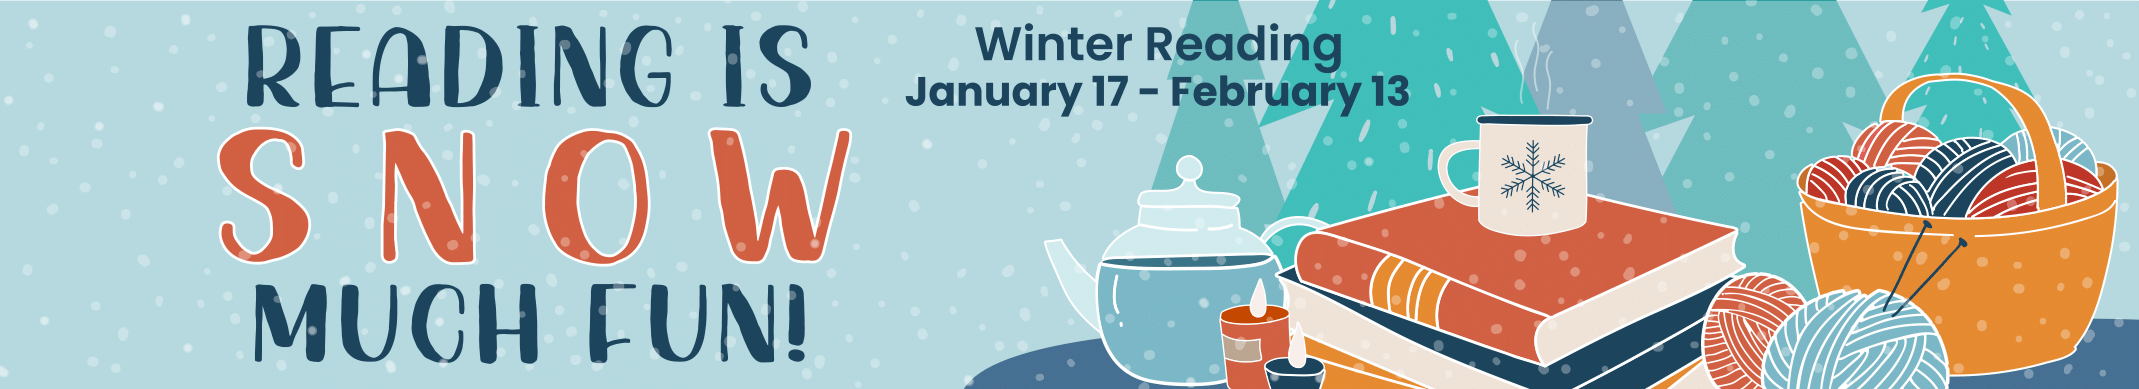 Winter Reading graphic